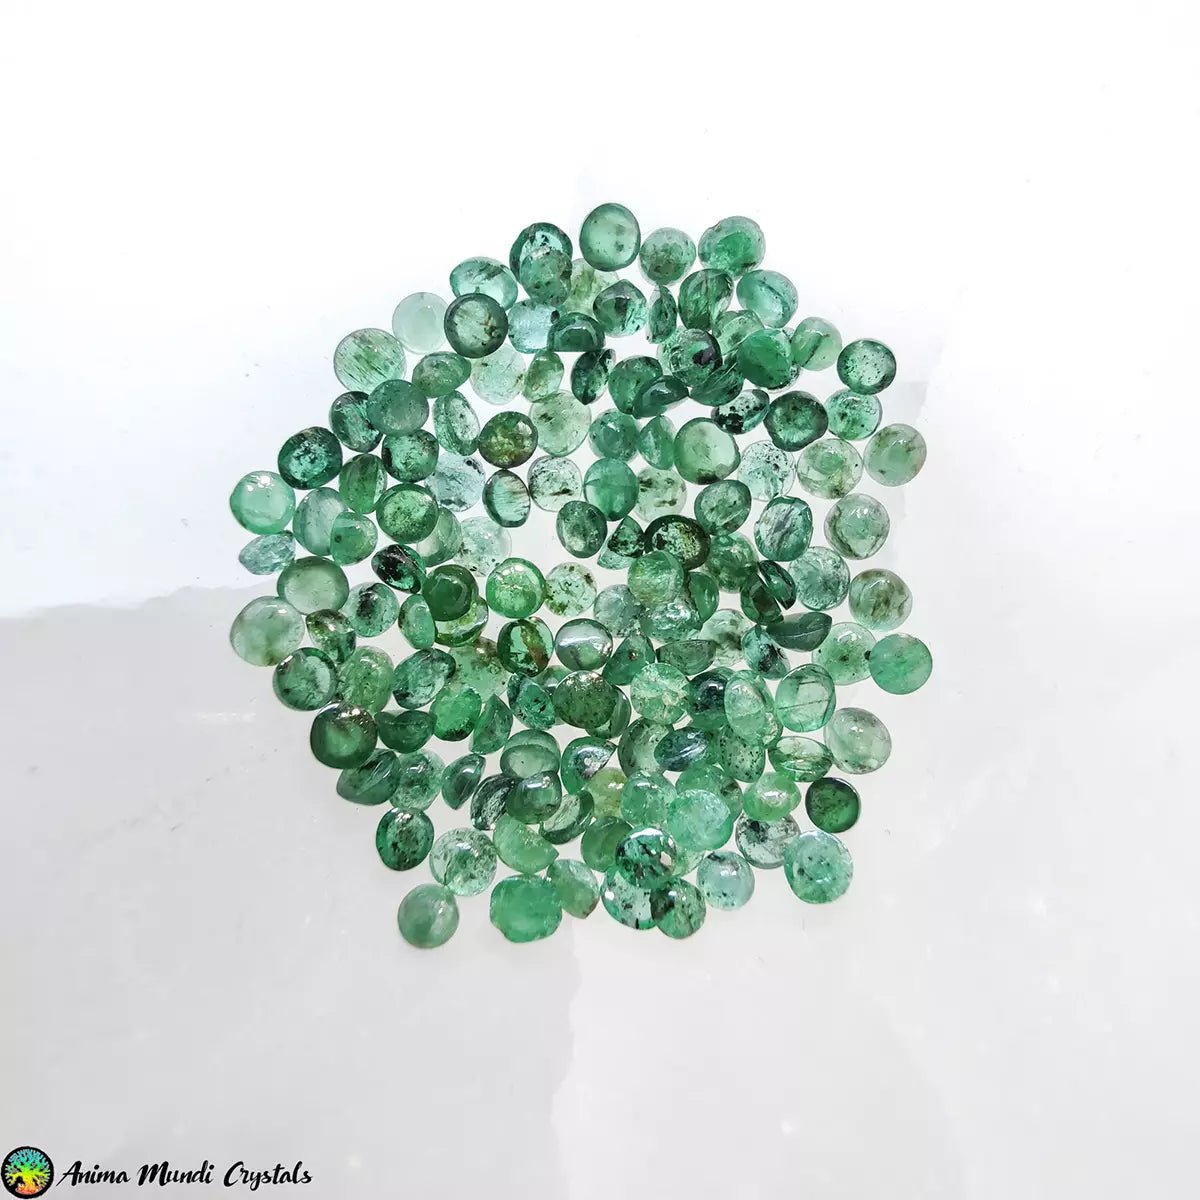 2.5mm Emerald Round Cabochons - 5pcs - Anima Mundi Crystals